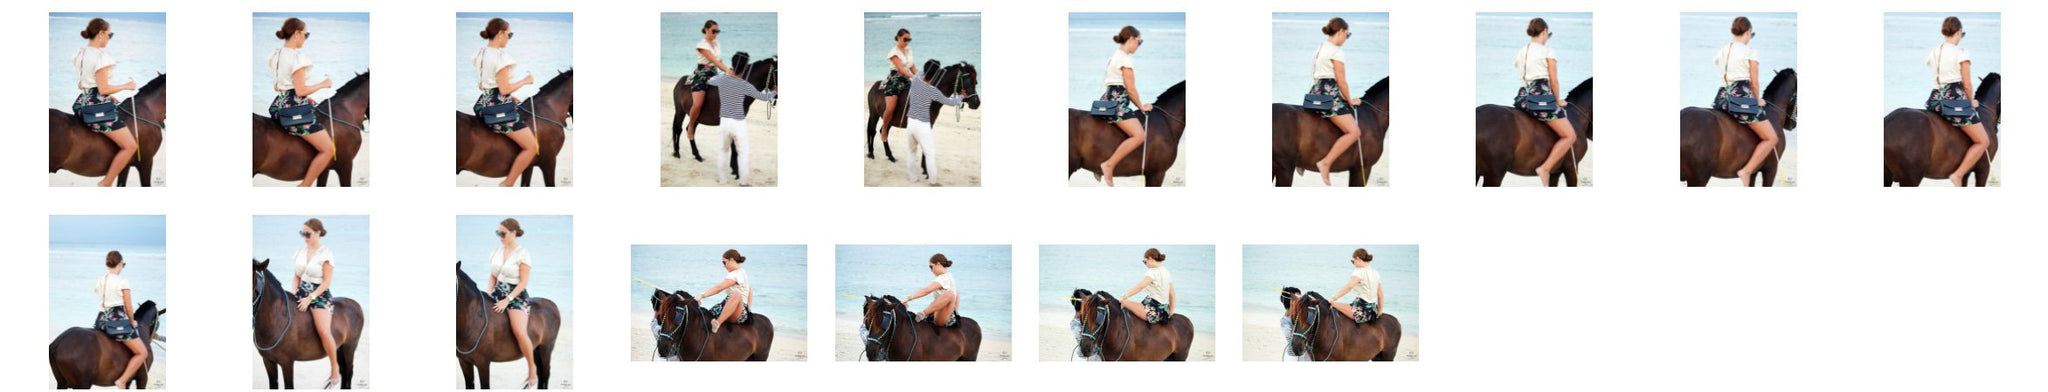 Liz in Skirt with Handbag Riding Bareback on Brown Pony - Riding.Vision